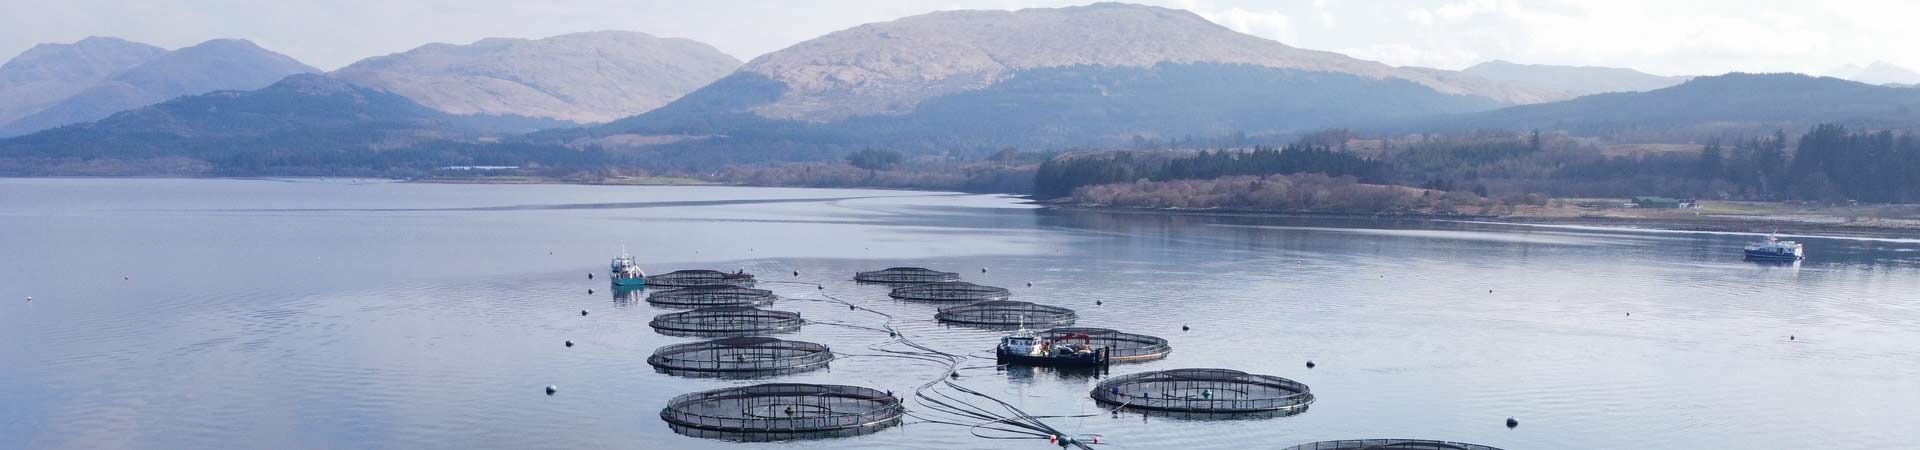 fish farm on the west coast of scotland